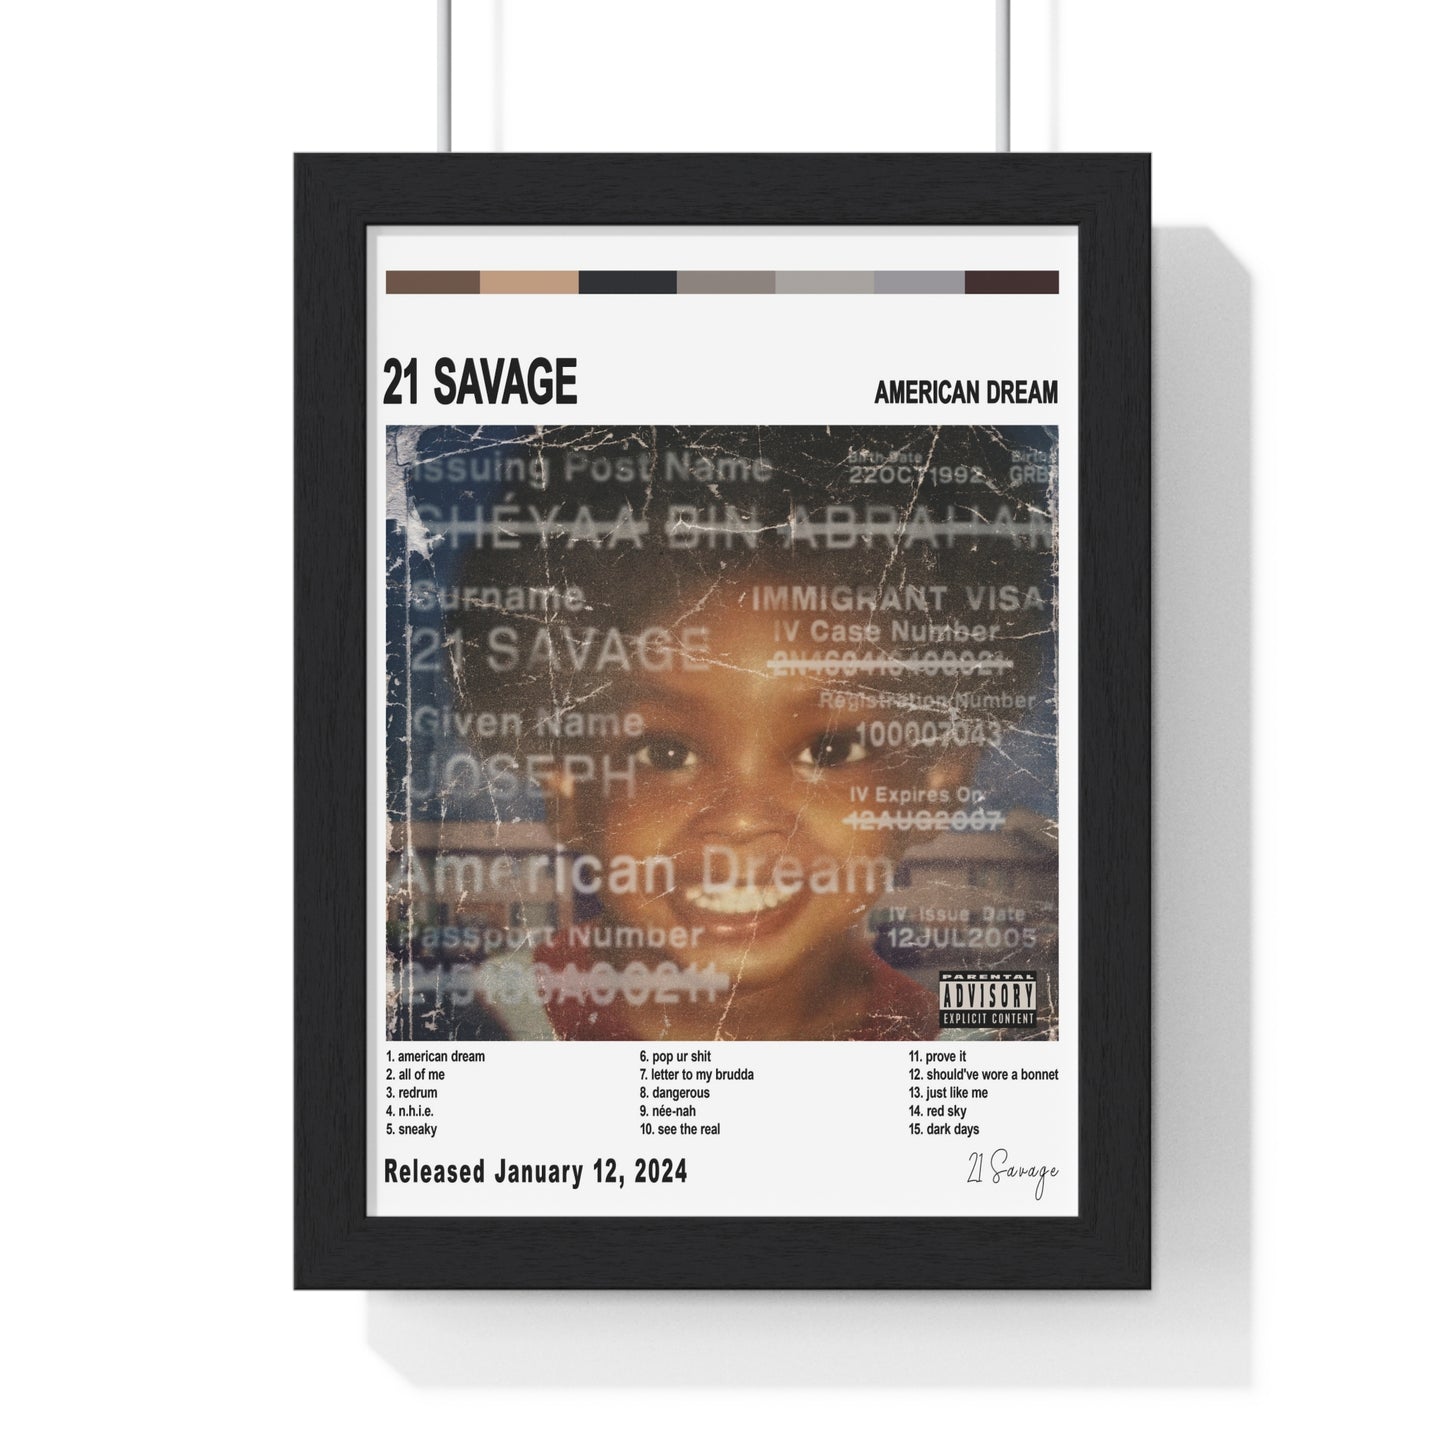 21 savage - Album Cover Poster